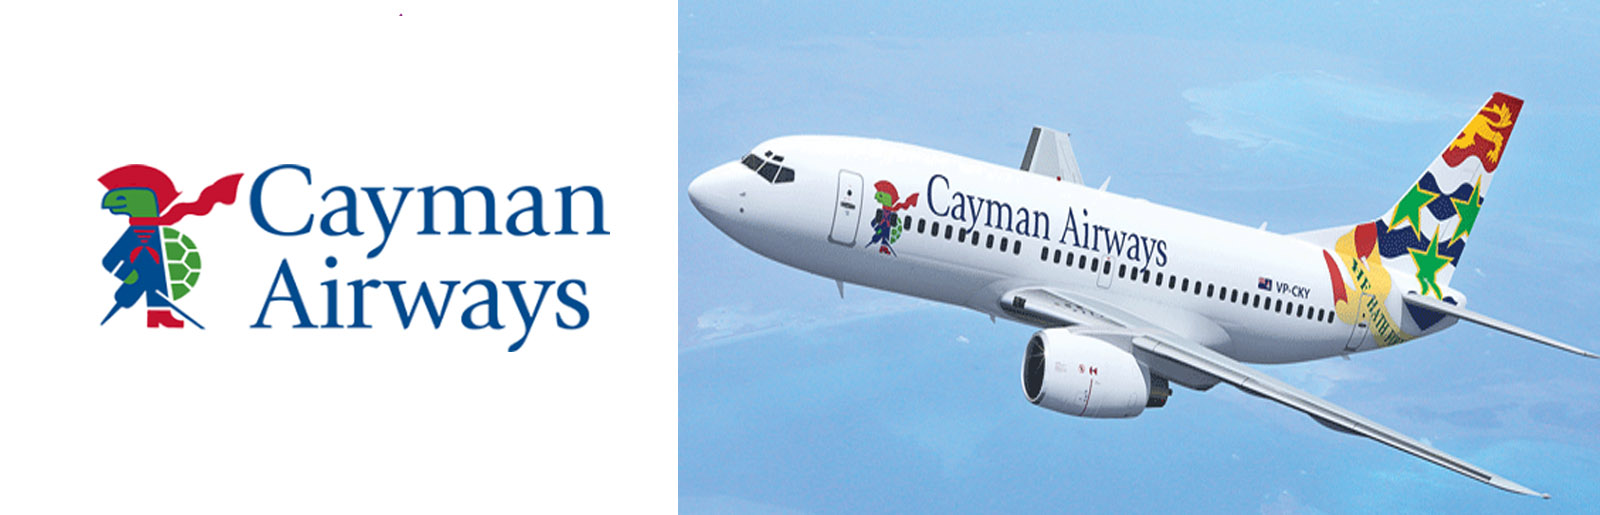 Cayman Airways JFK airport